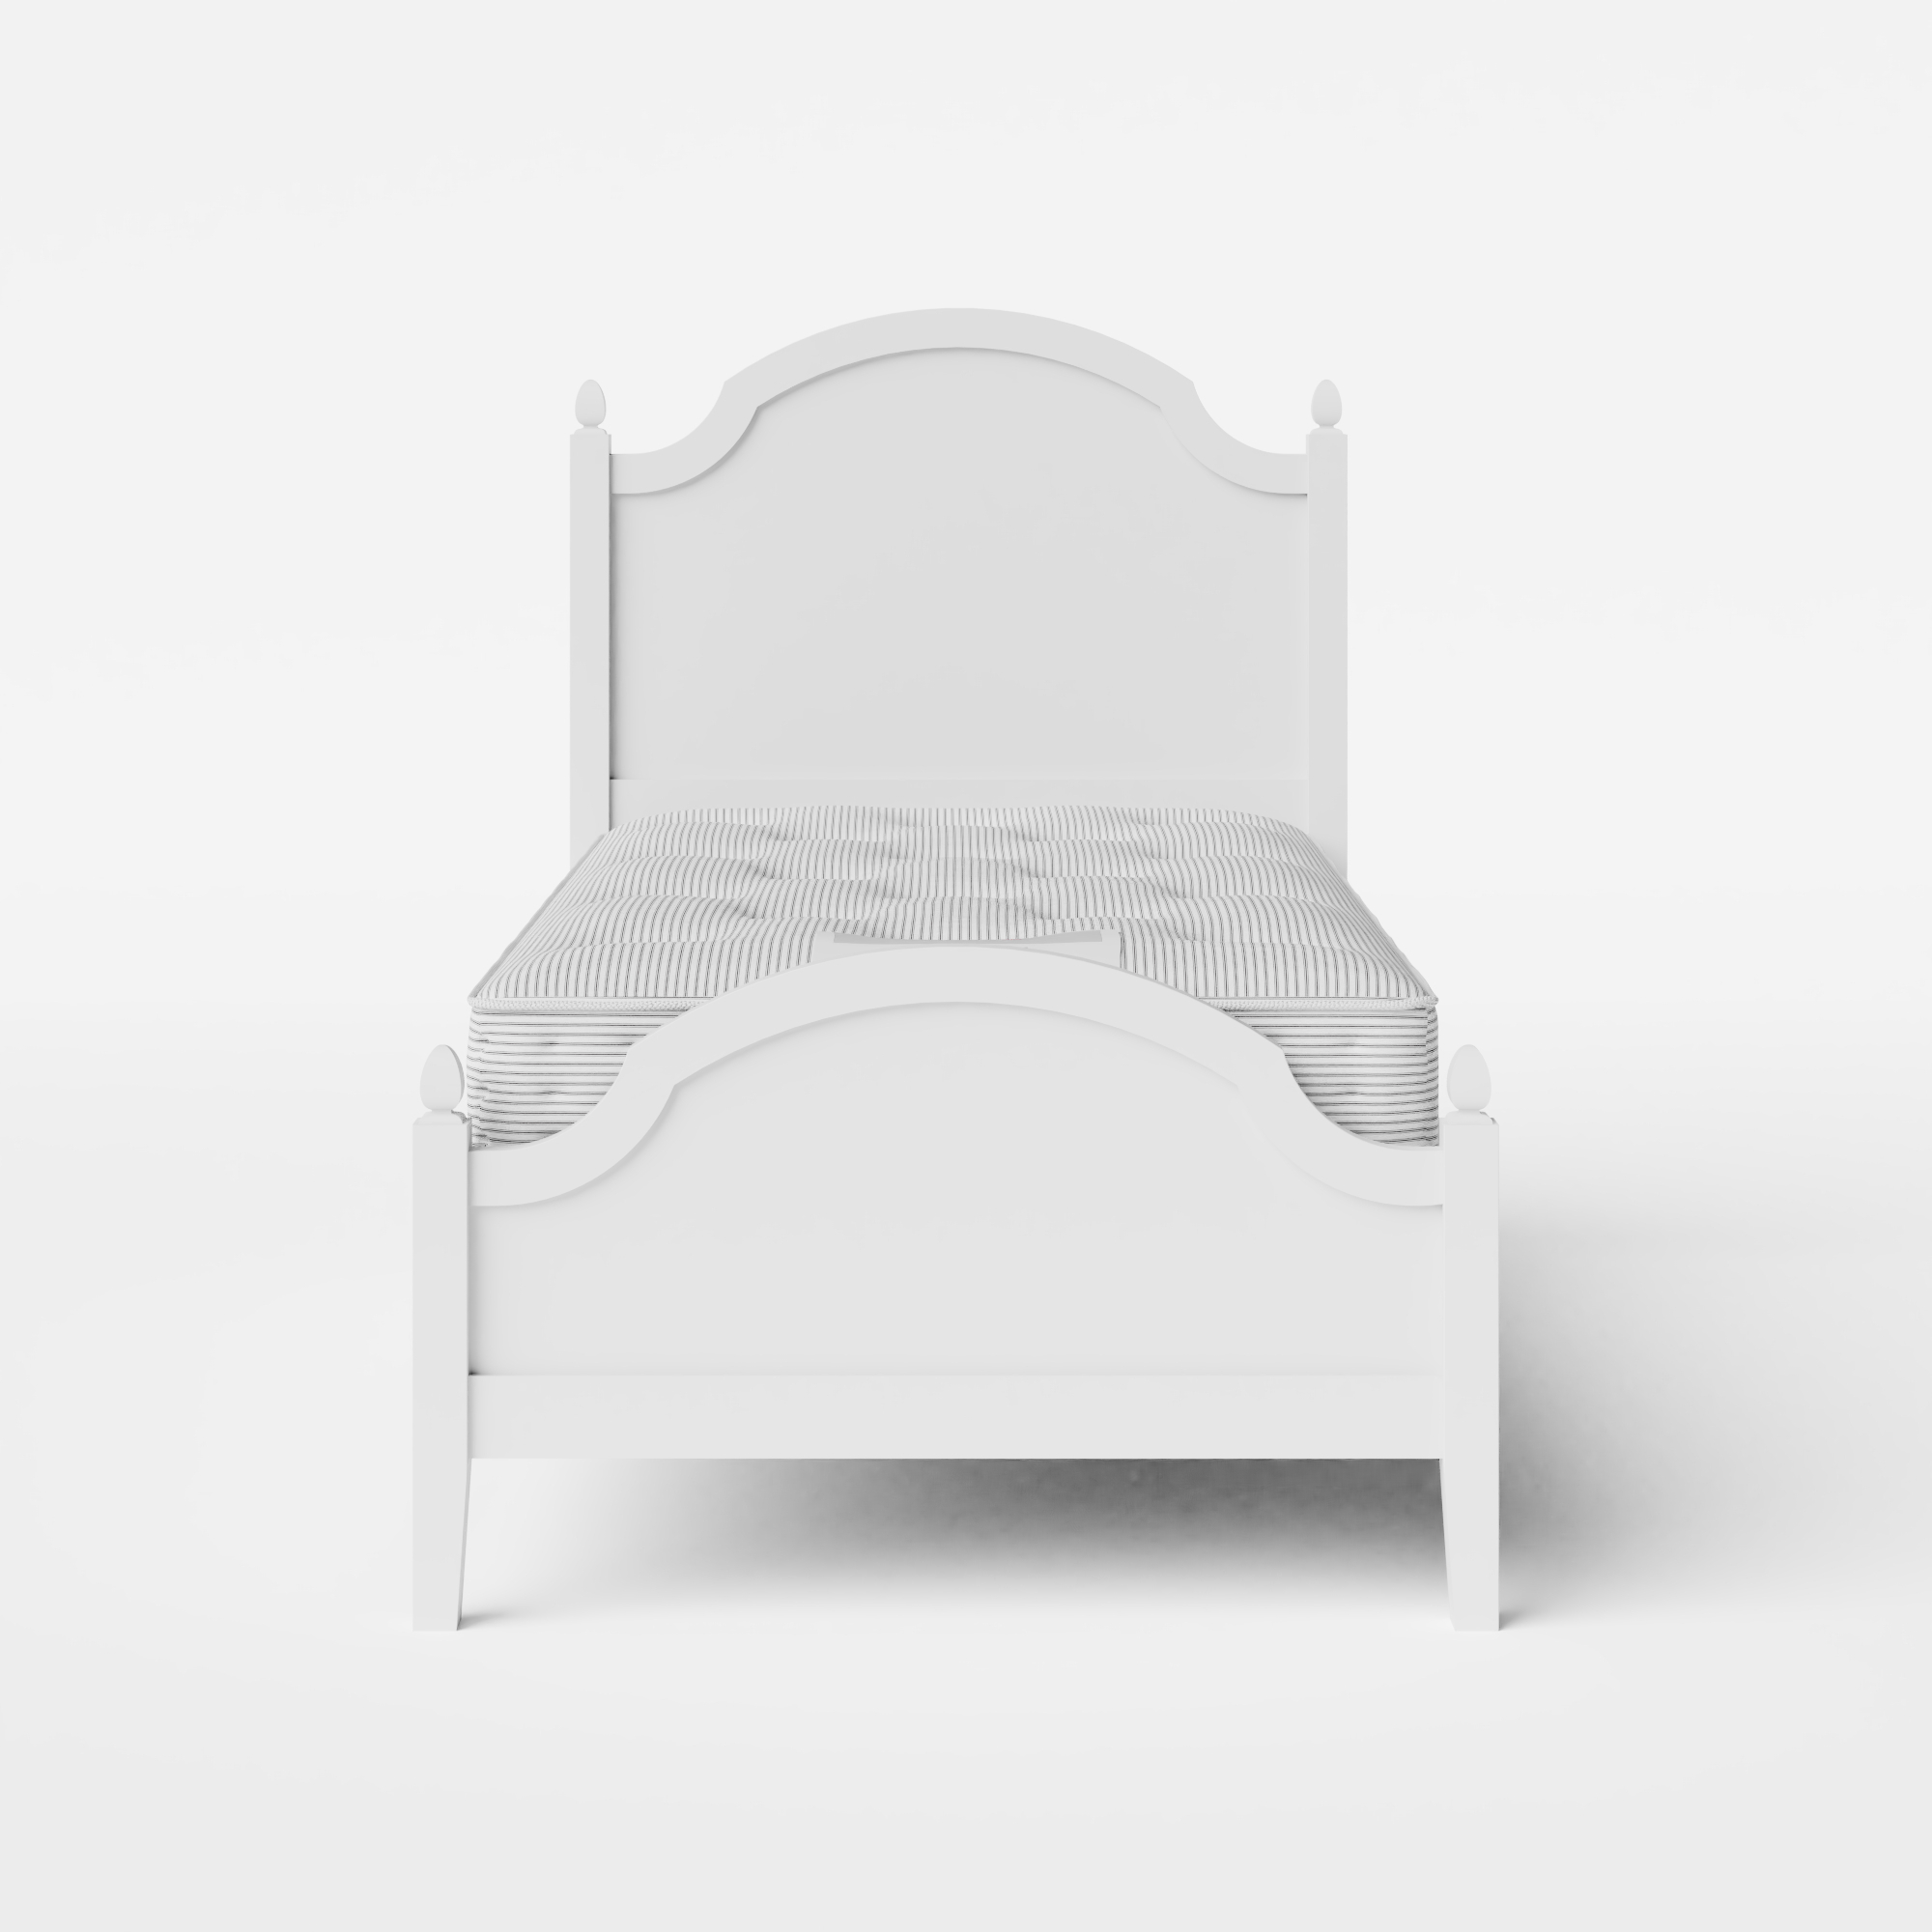 Kipling Low Footend Painted lit simple en bois peint en blanc avec matelas